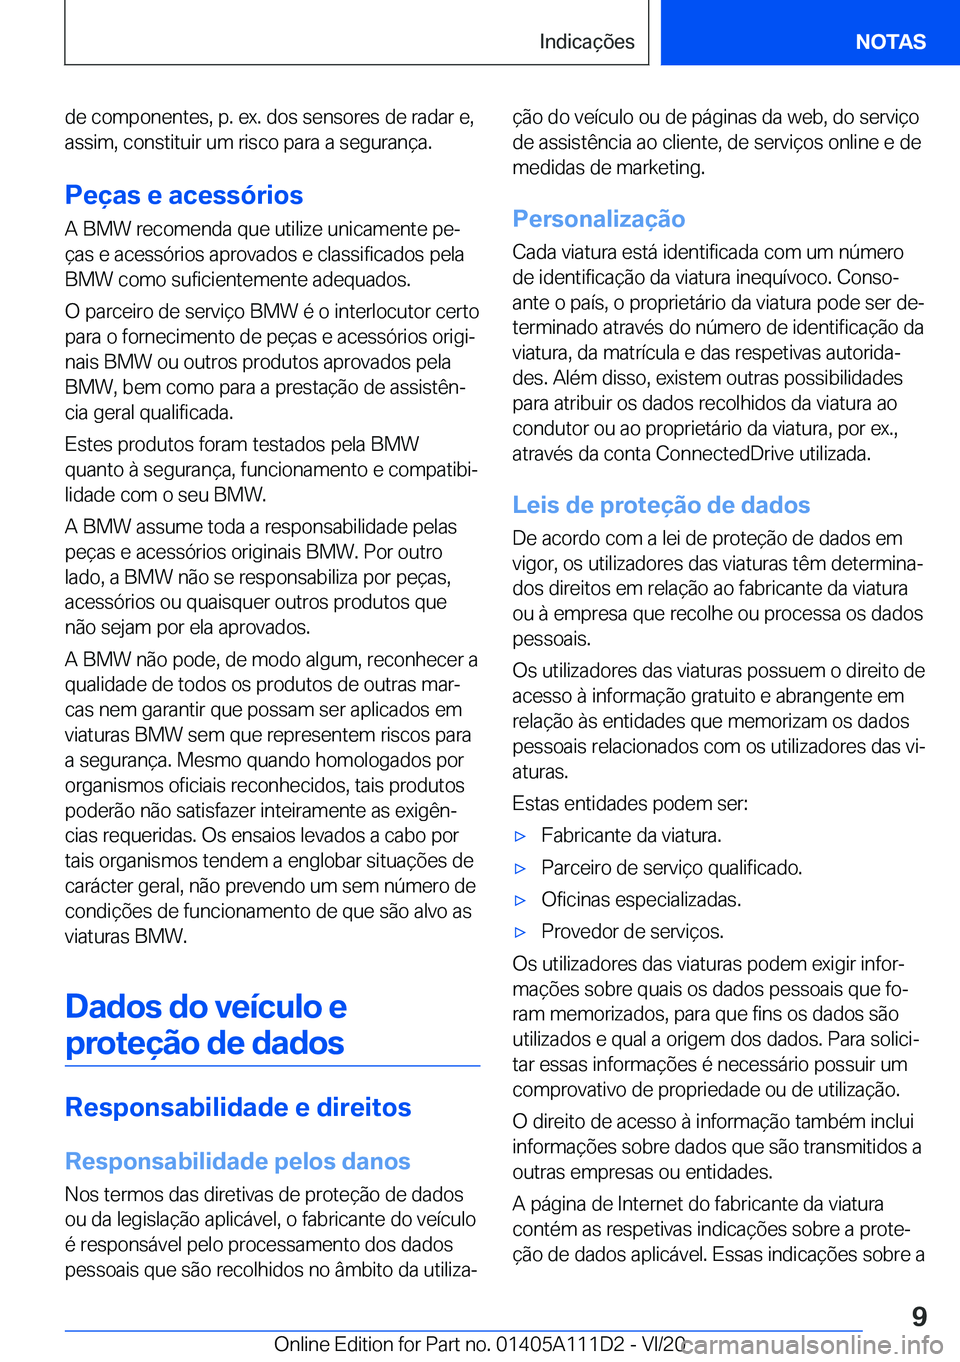 BMW 3 SERIES SEDAN PLUG-IN HYBRID 2021  Manual do condutor (in Portuguese) �d�e��c�o�m�p�o�n�e�n�t�e�s�,��p�.��e�x�.��d�o�s��s�e�n�s�o�r�e�s��d�e��r�a�d�a�r��e�,�a�s�s�i�m�,��c�o�n�s�t�i�t�u�i�r��u�m��r�i�s�c�o��p�a�r�a��a��s�e�g�u�r�a�n�